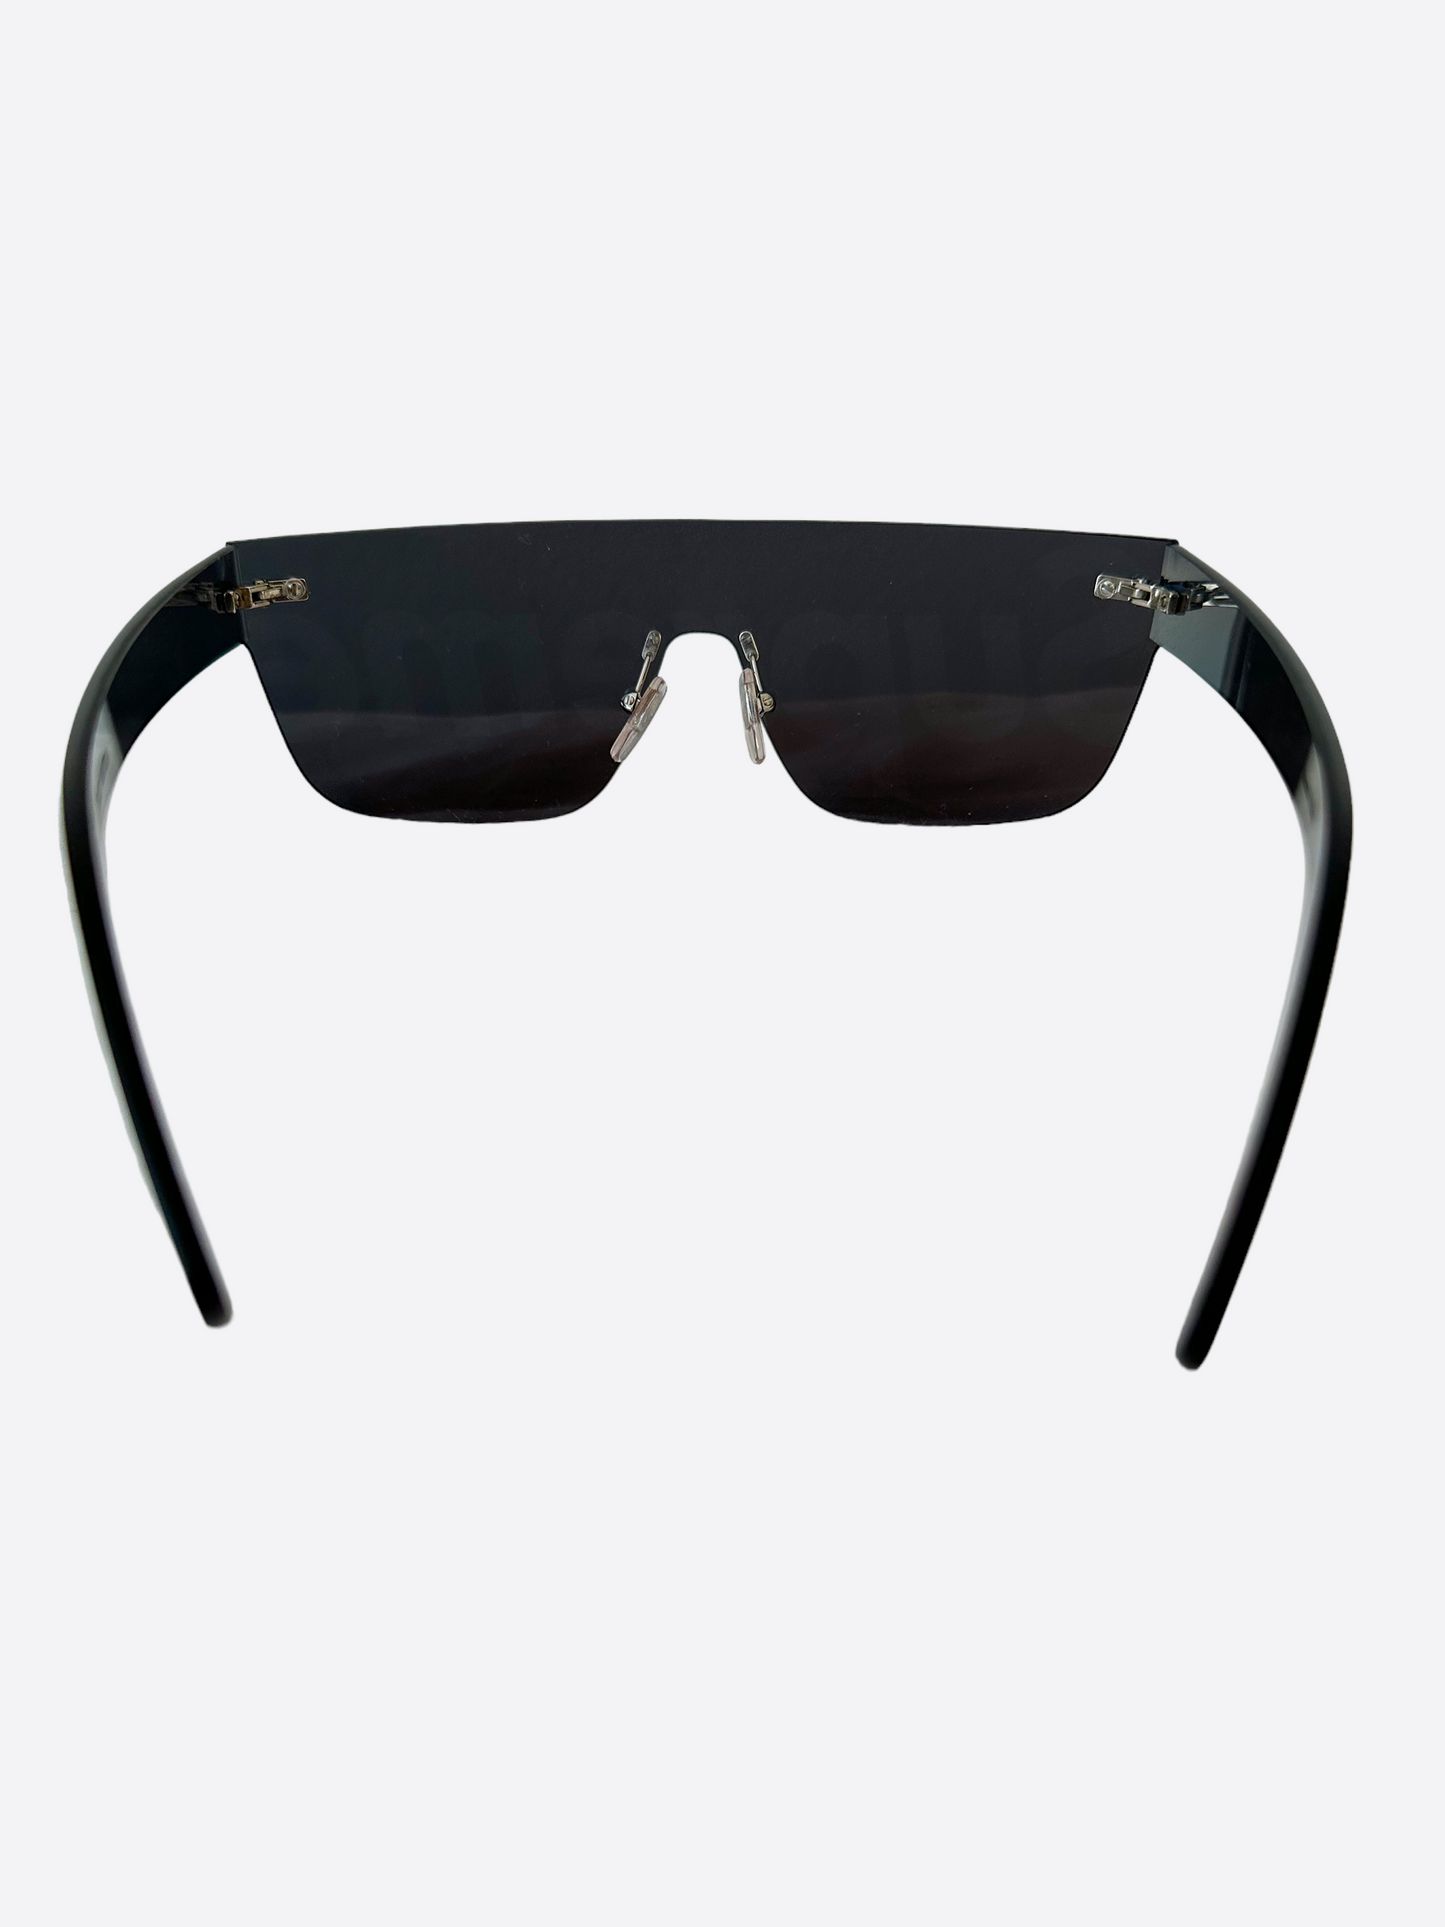 Sunglasses, Supreme, City Mask, for Louis vuitton. - Bukowskis